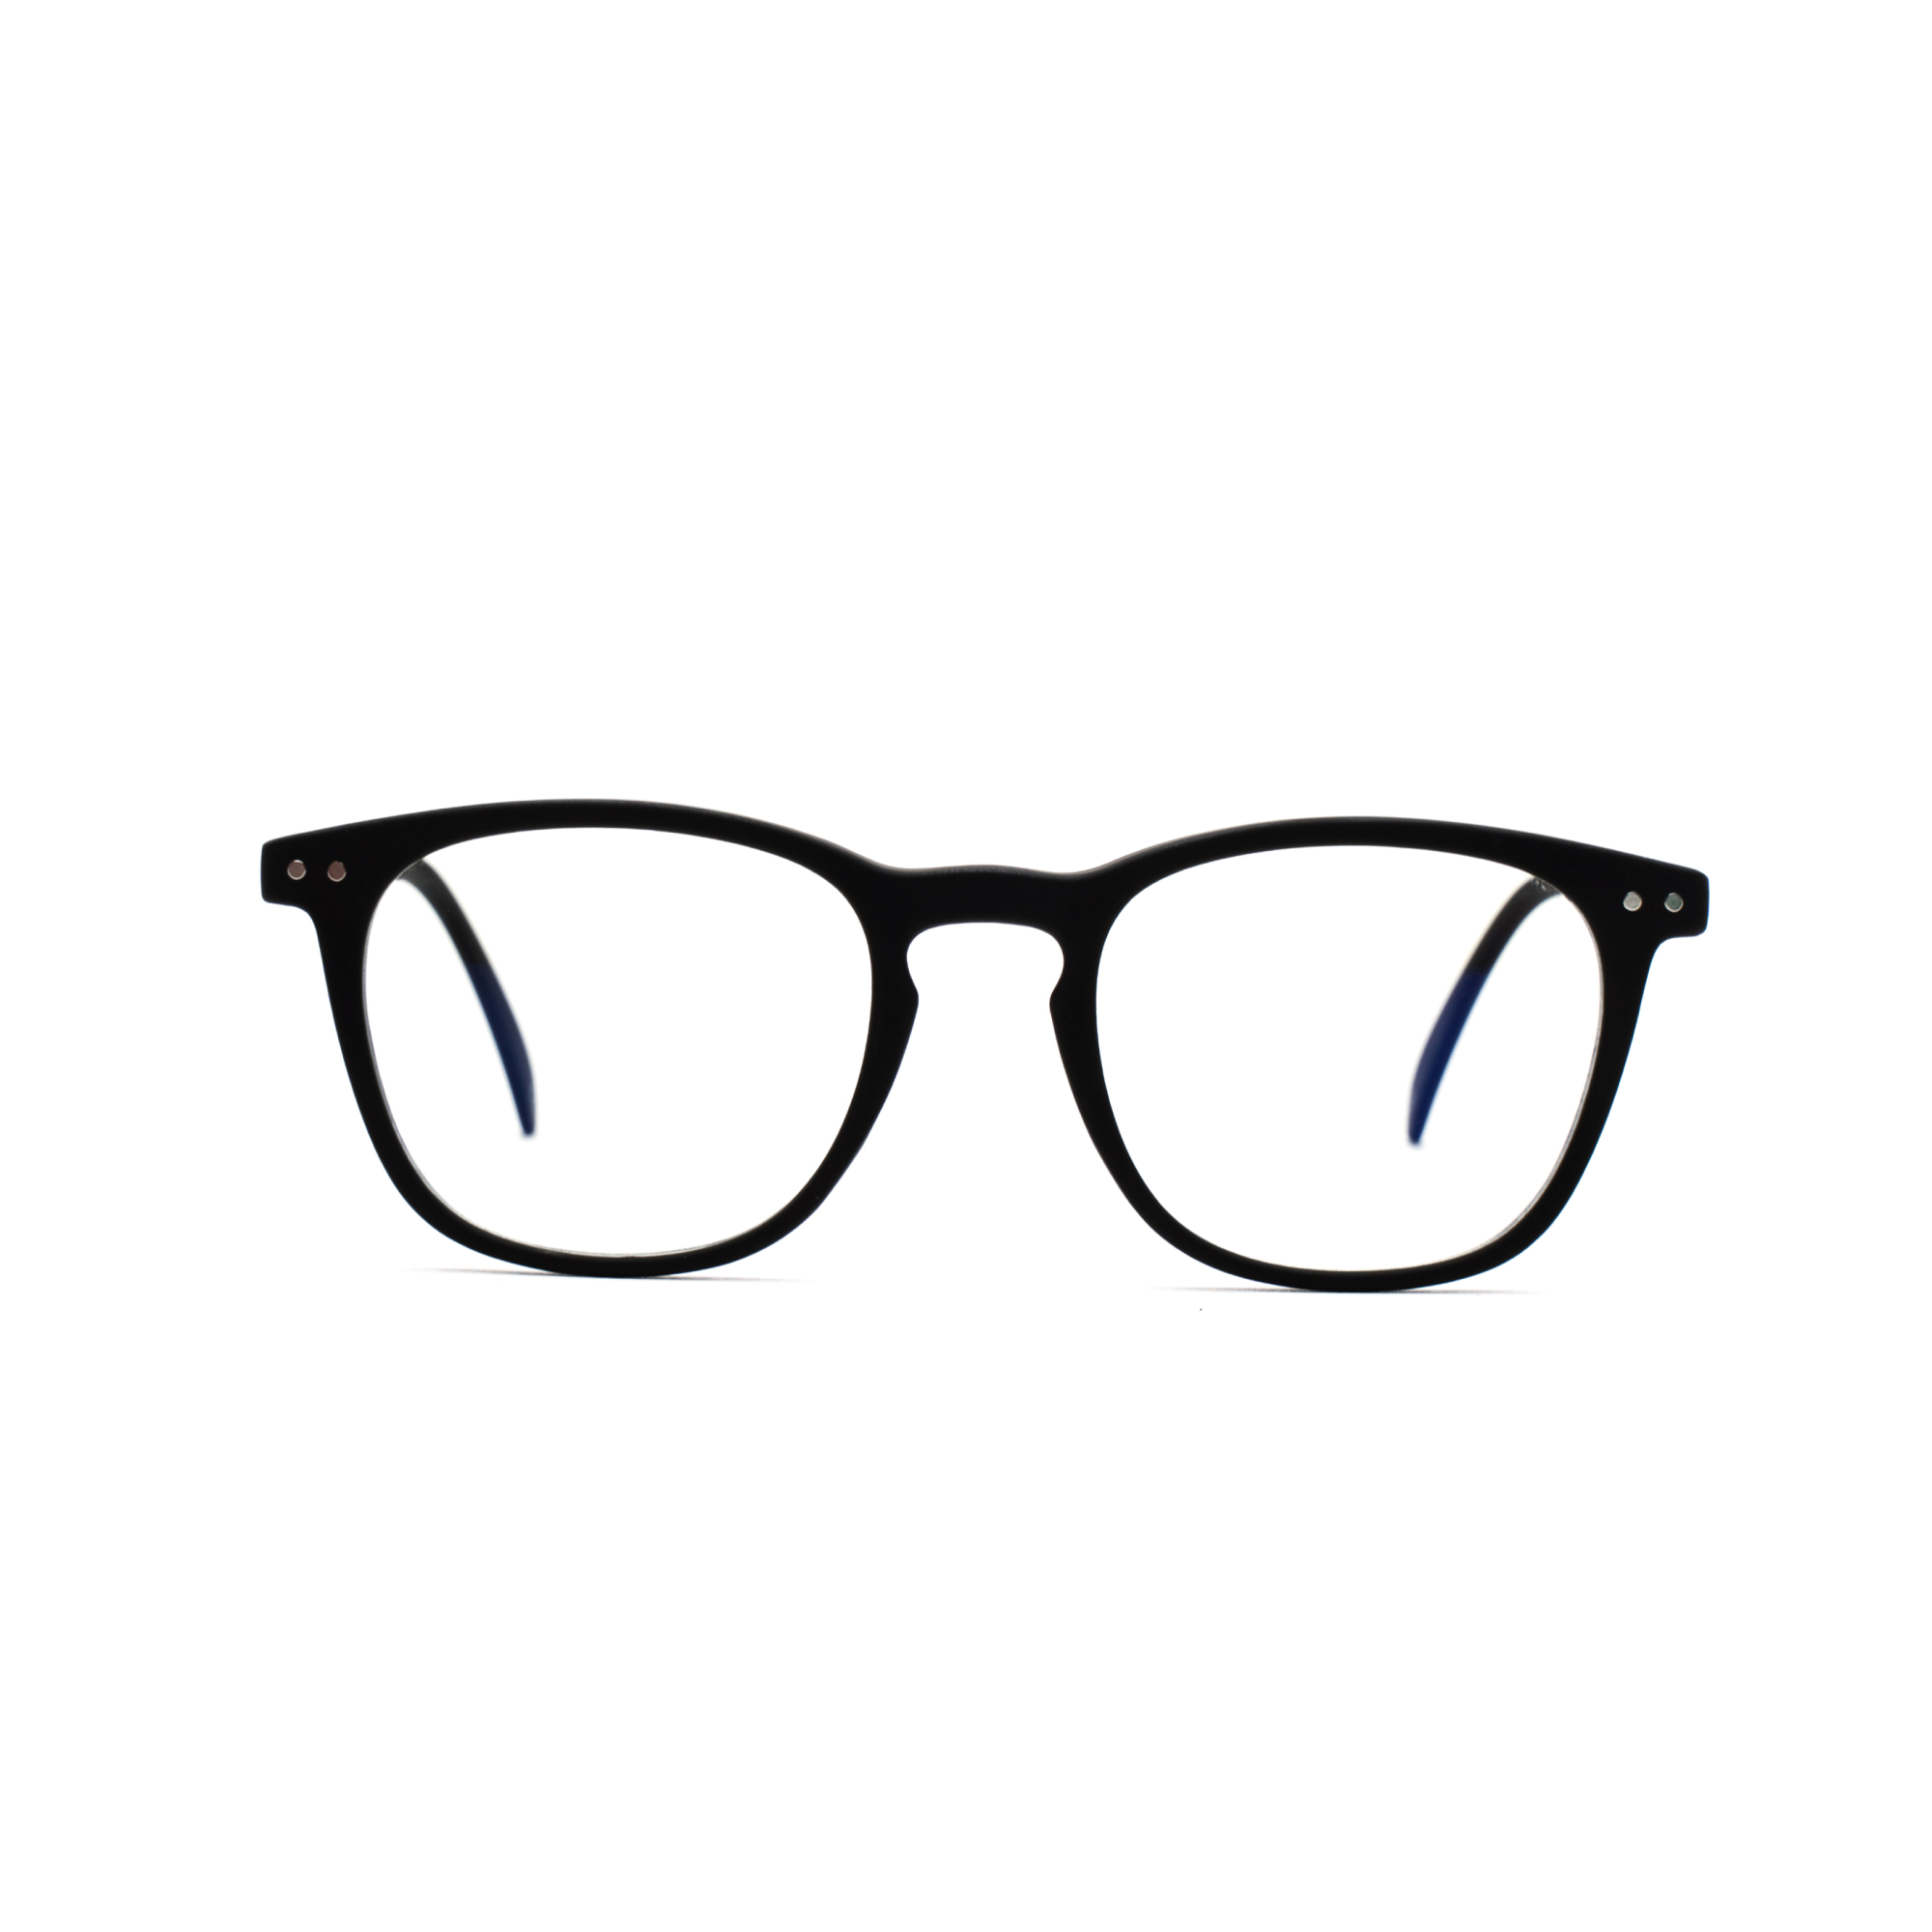 Men's blue light reading glasses – William BlueVision m - Black